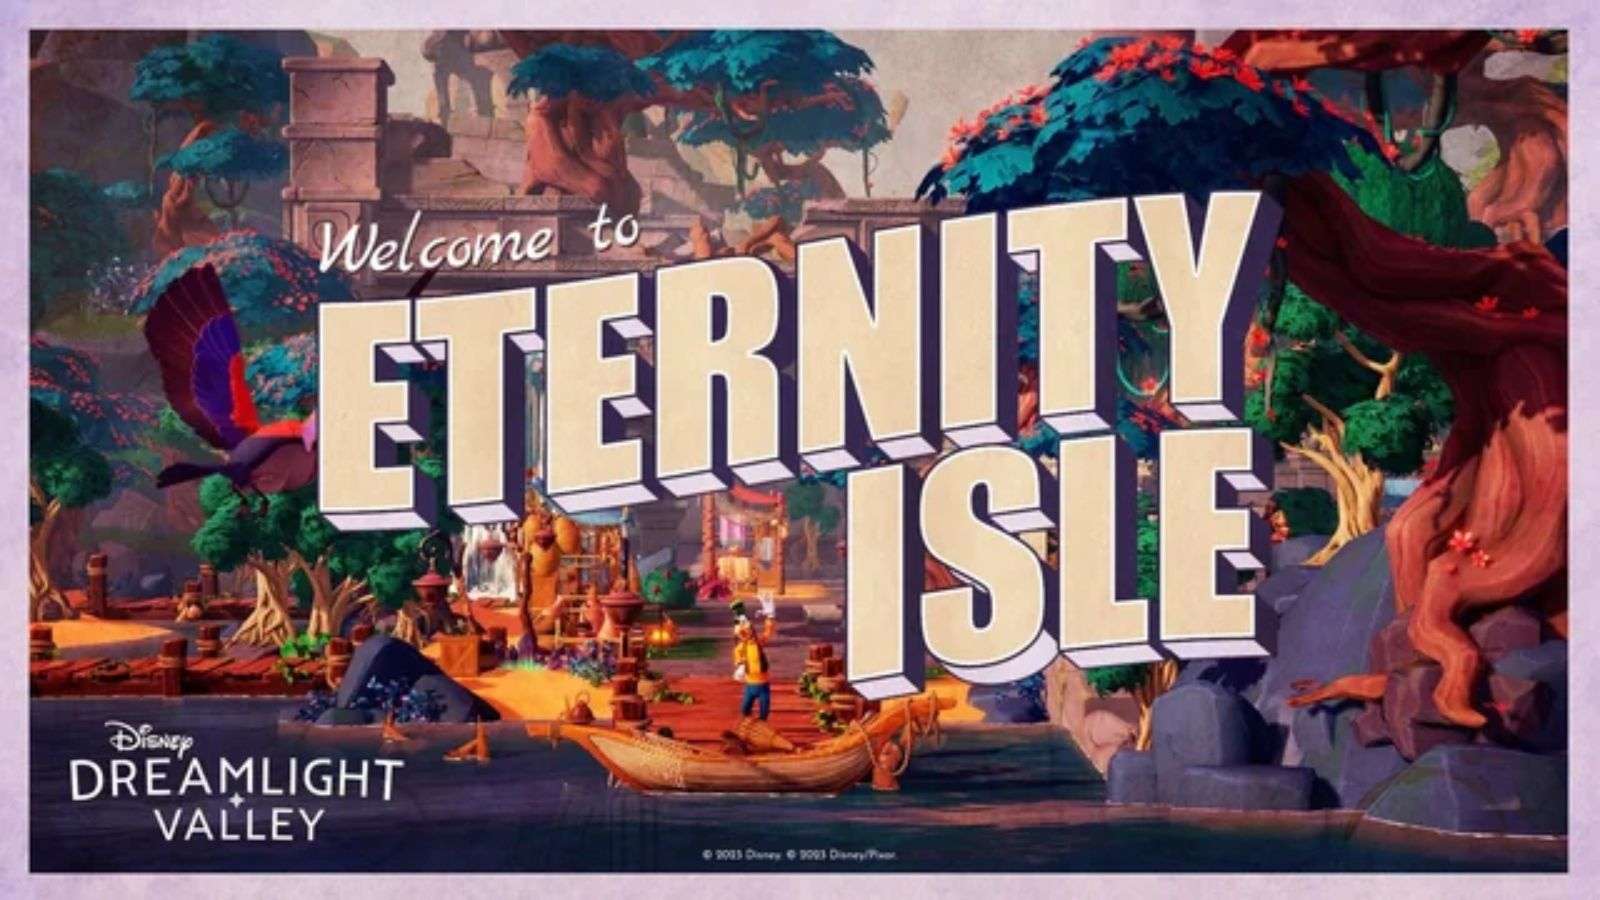 Disney Dreamlight Valley Eternity Isle